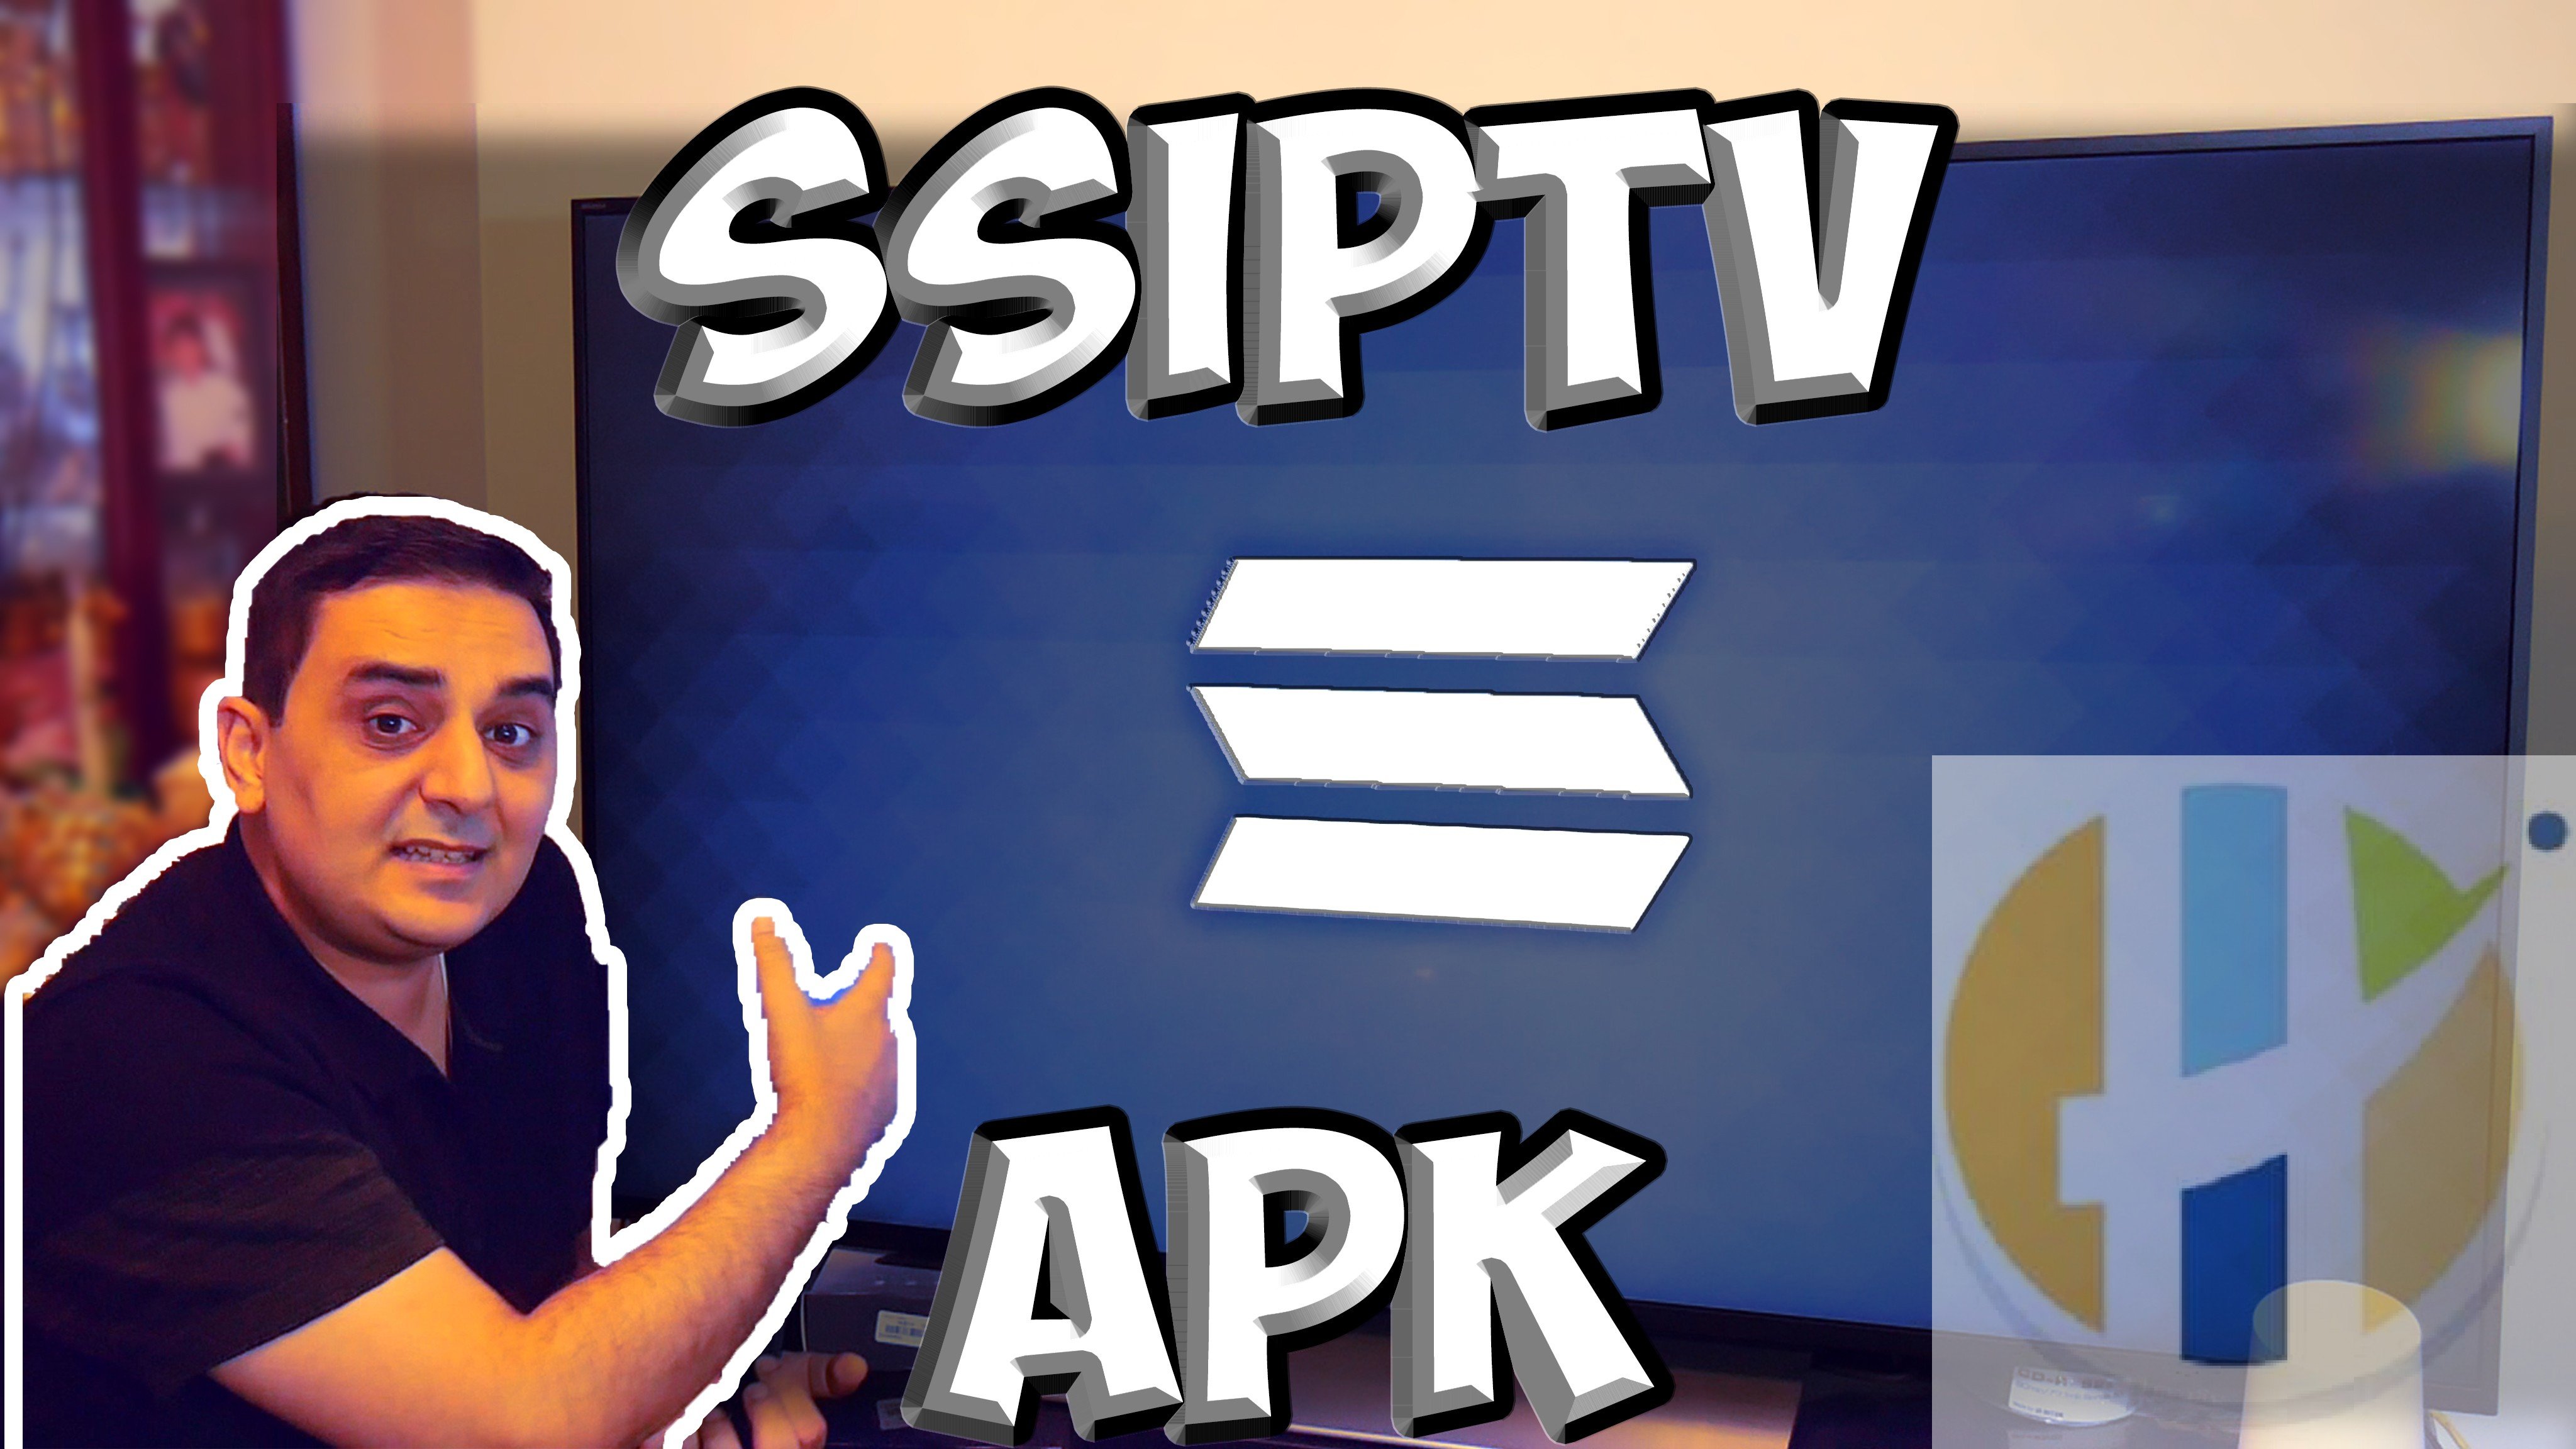 SSIPTV APK (Simple Smart IPTV) Stream Live TV contents to